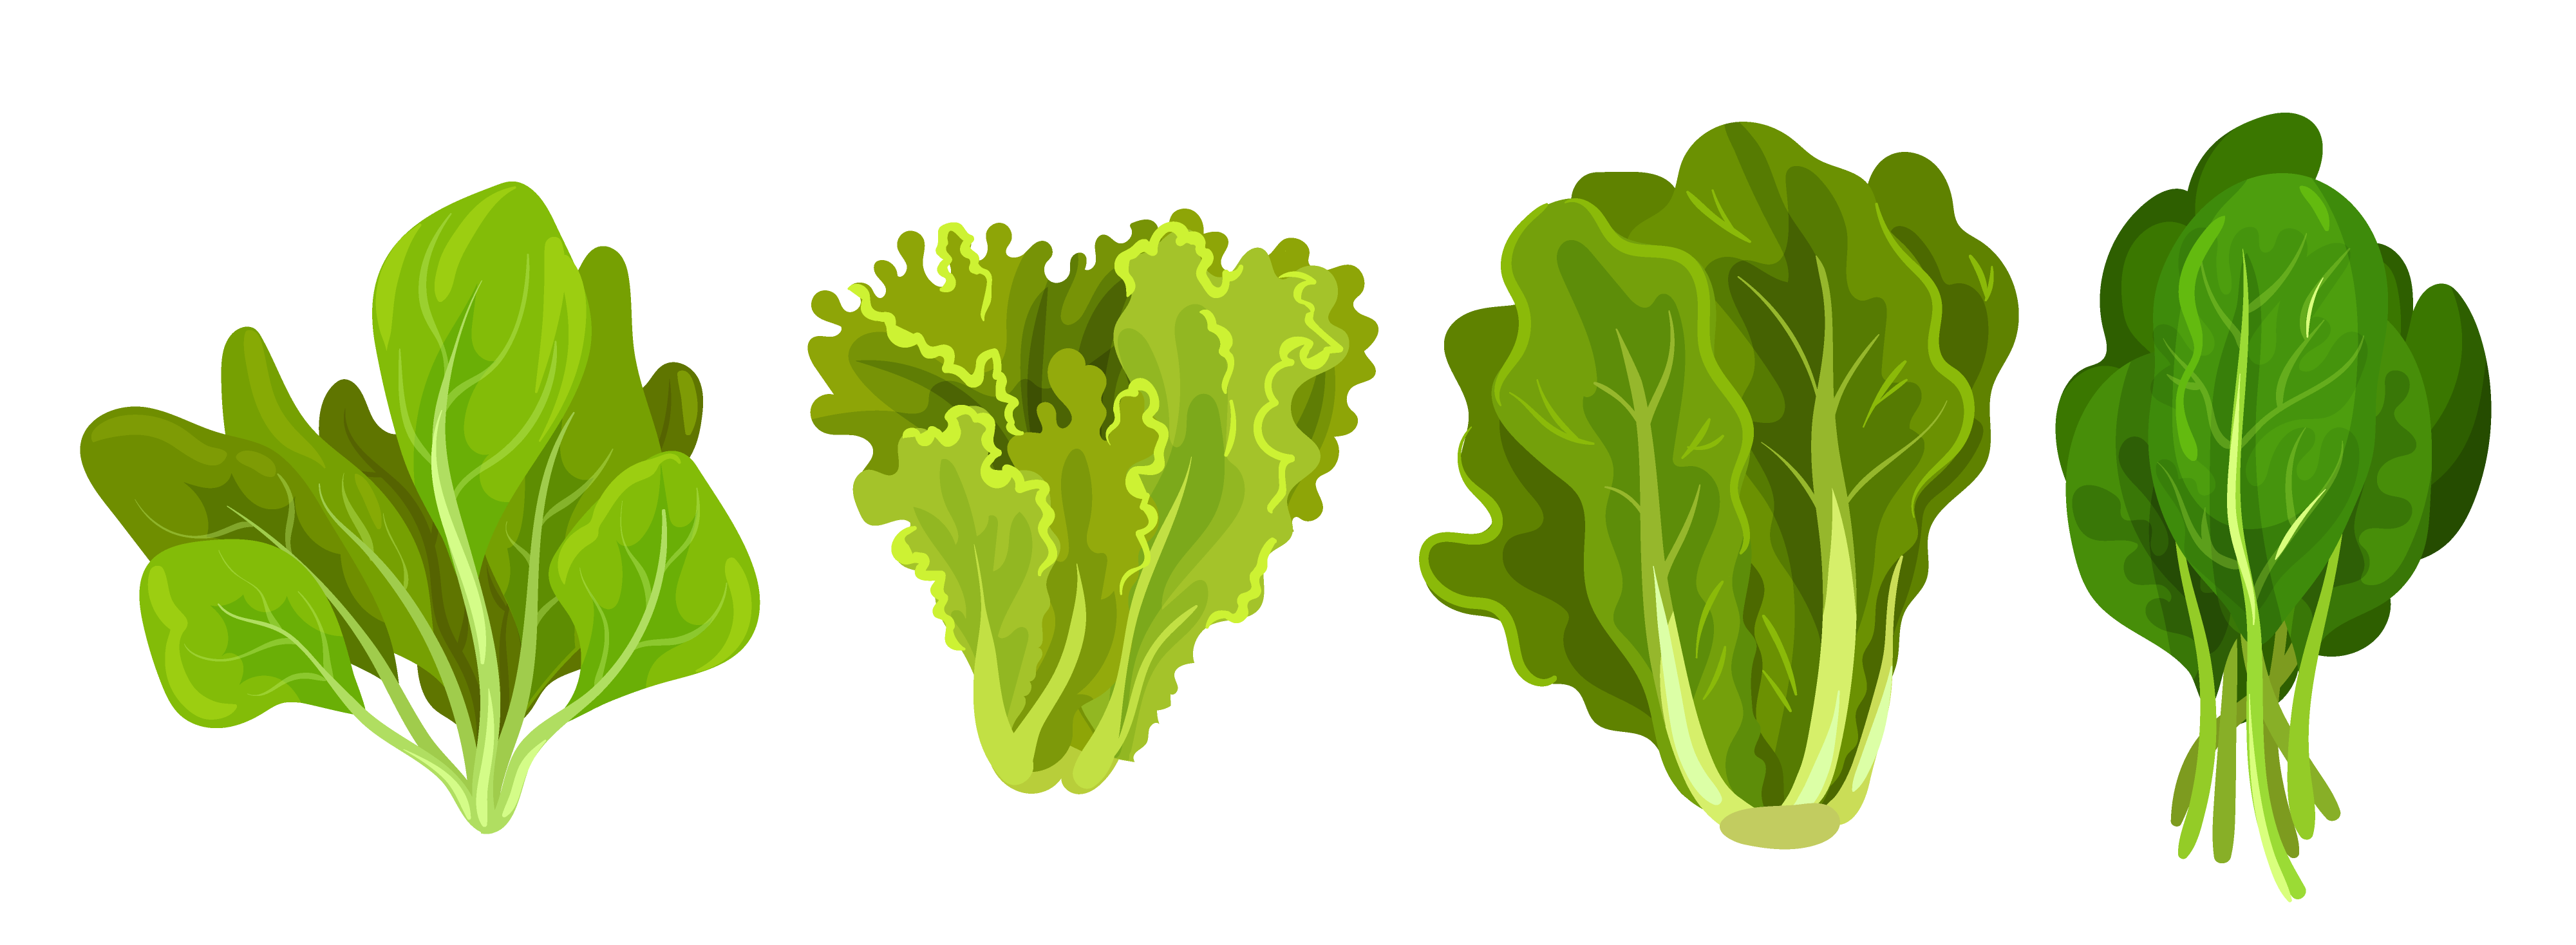 green vegetables for diabetes